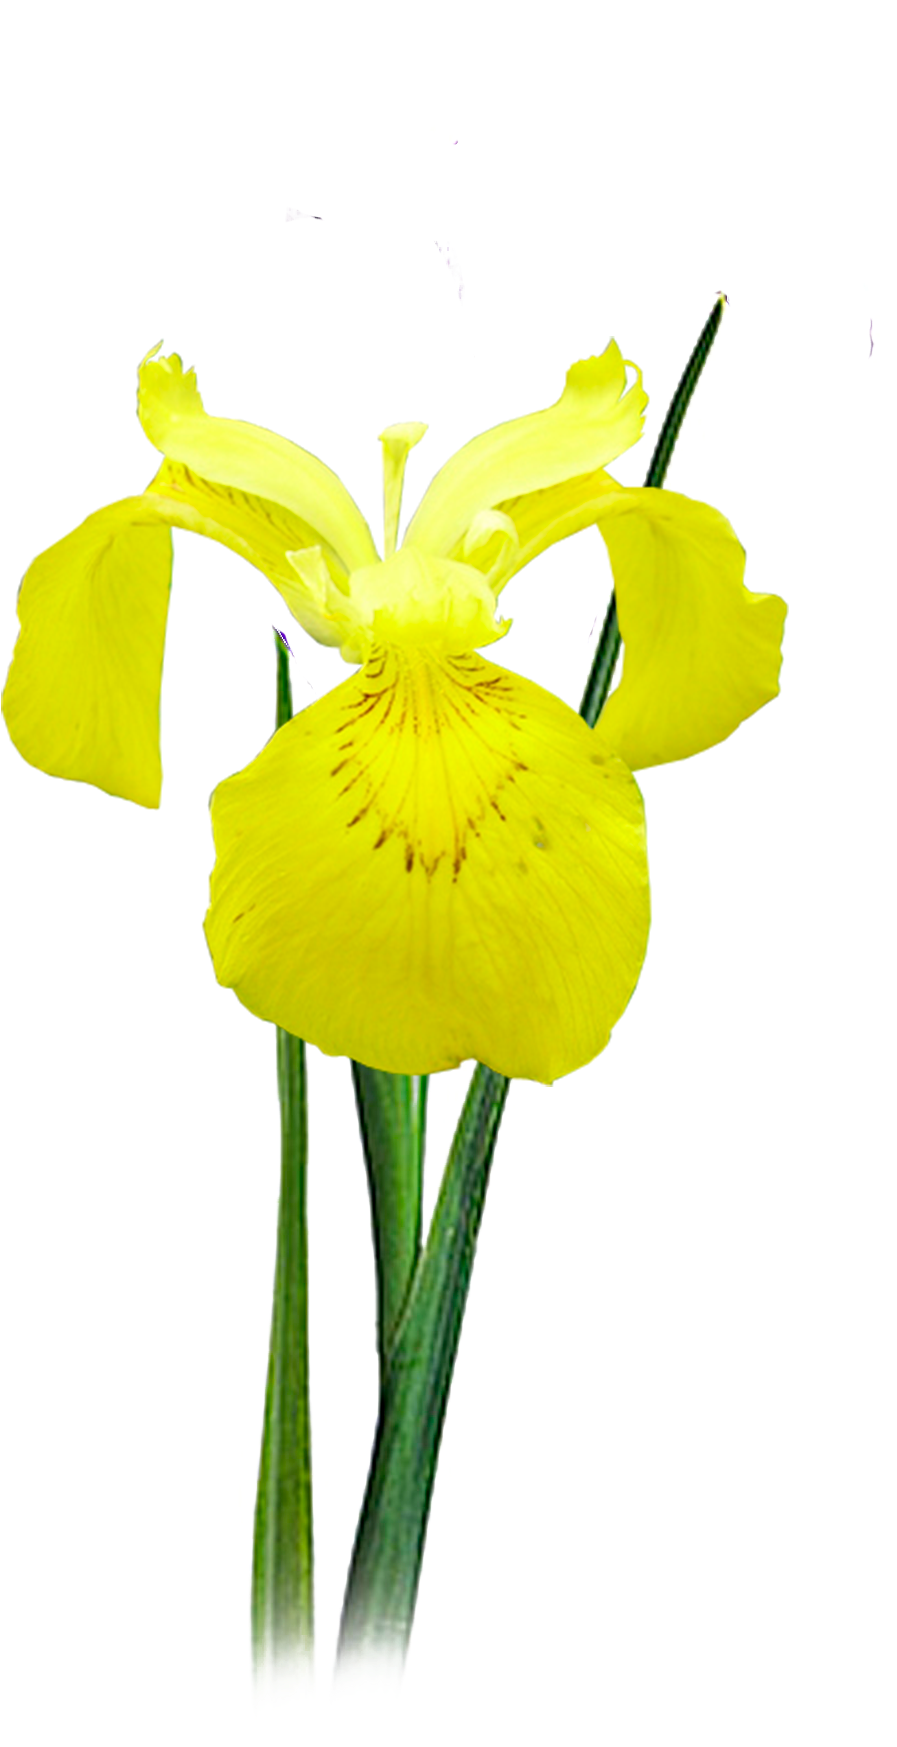 Next - Yellow Iris (1181x1968)